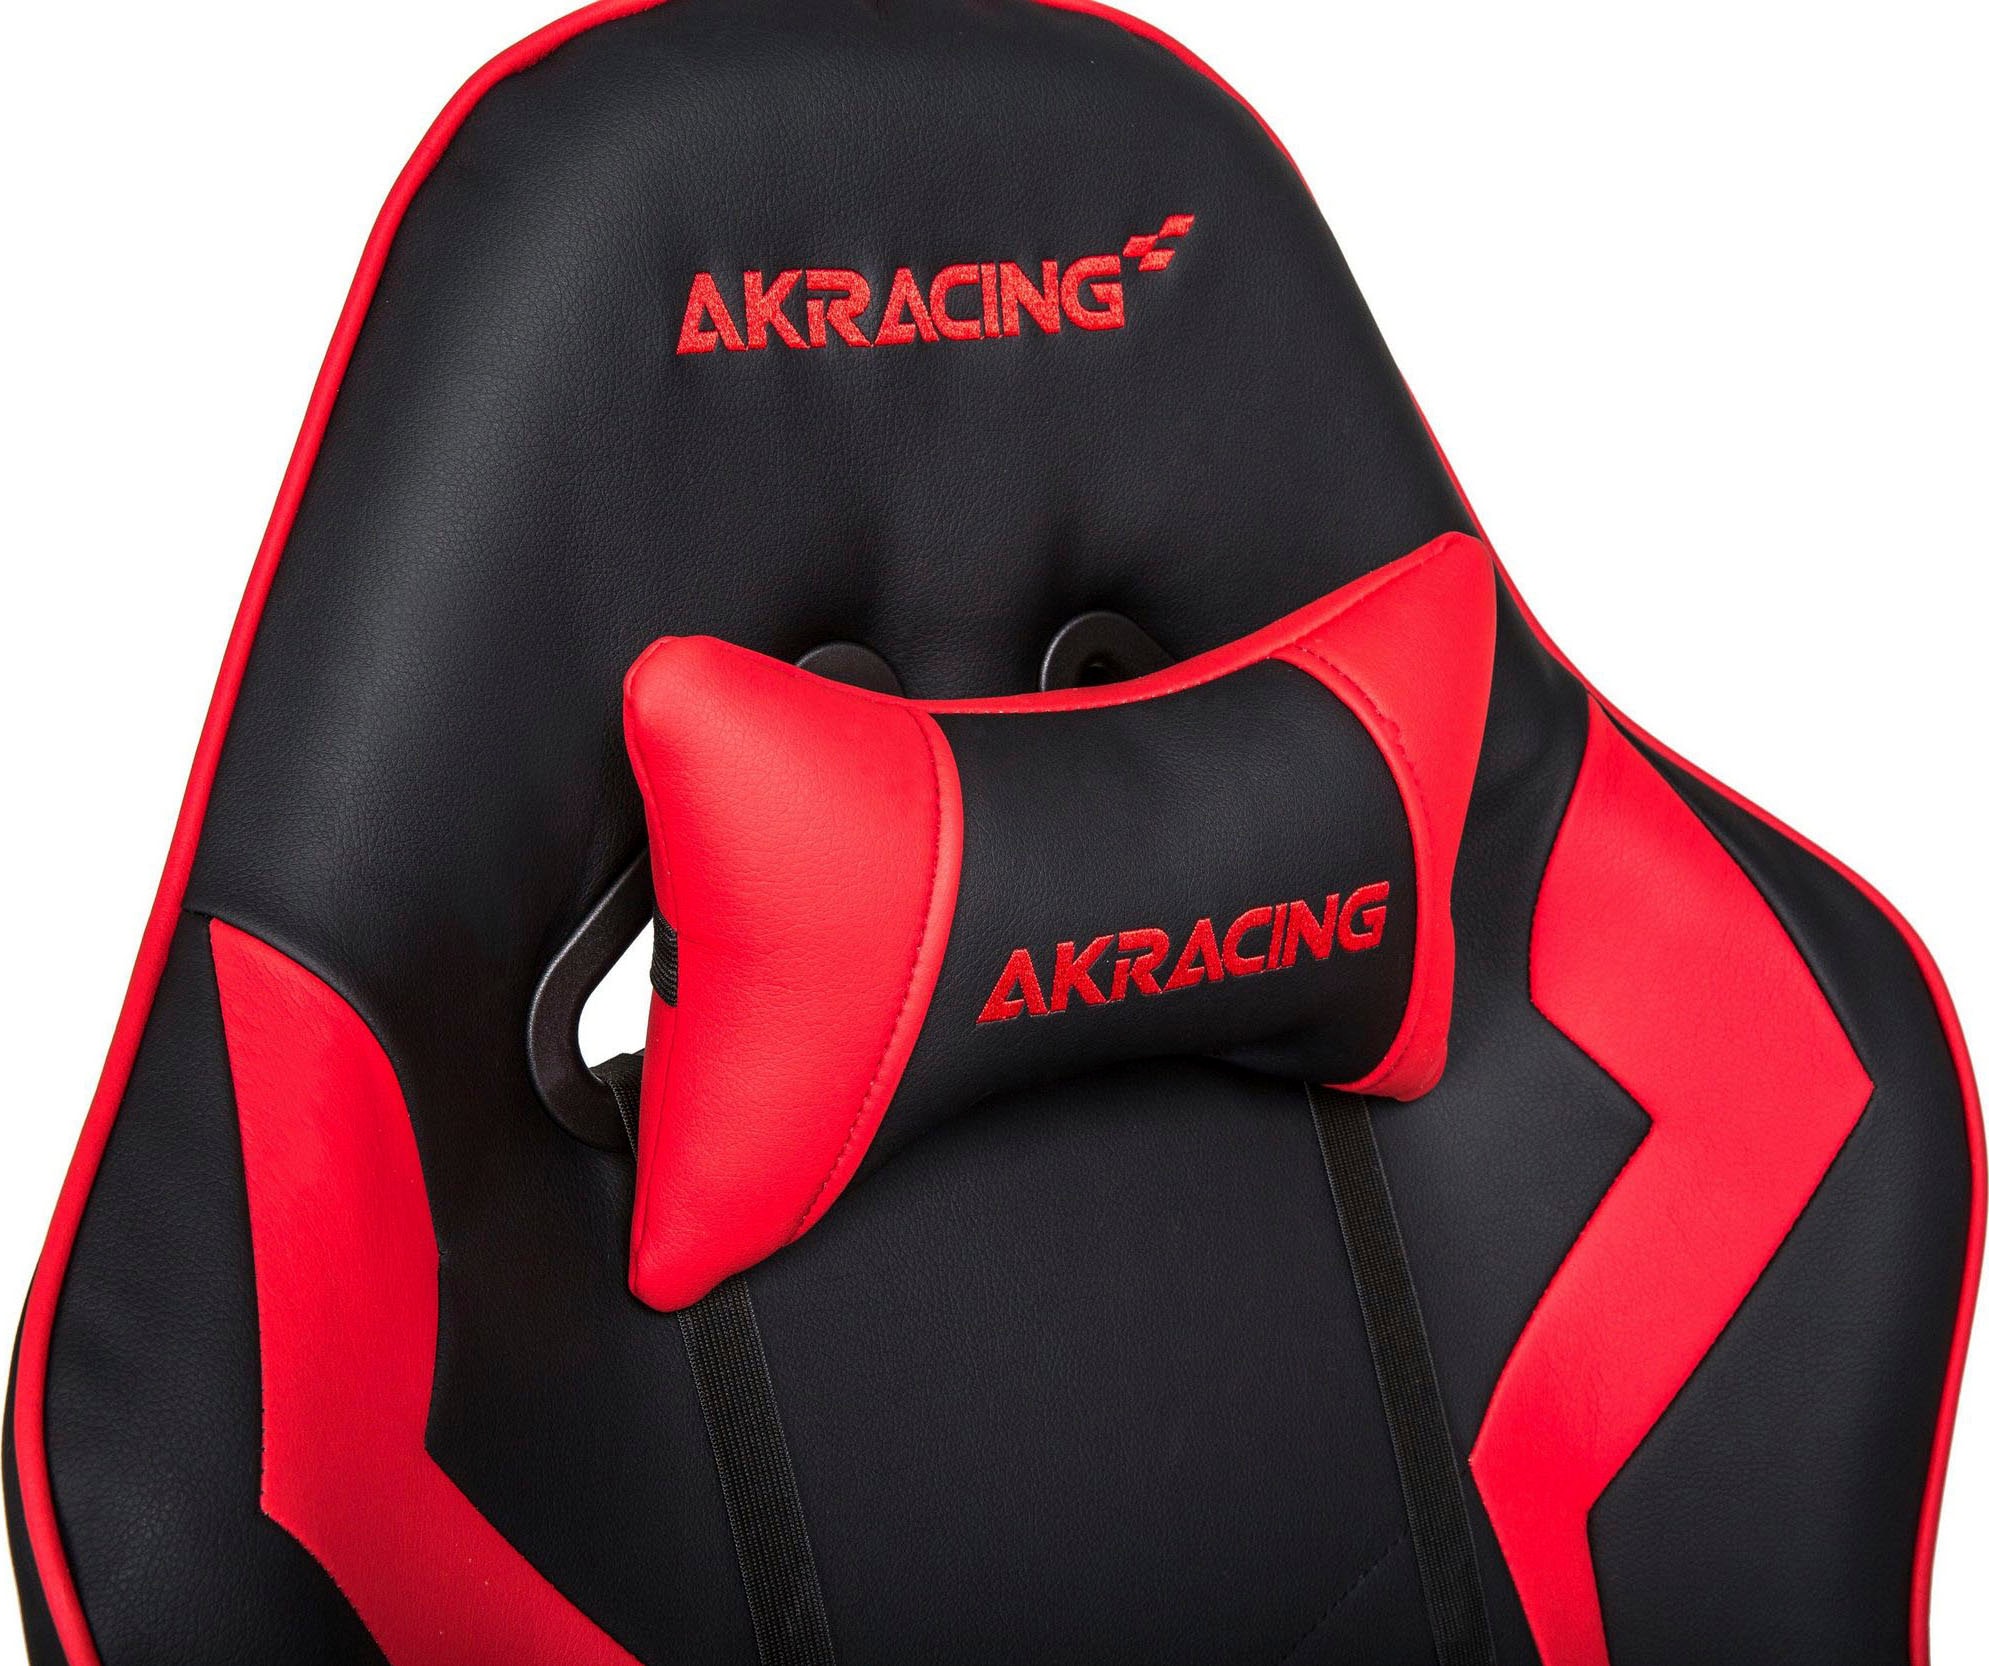 AKRacing Gaming-Stuhl »Core SX«, Kunstleder